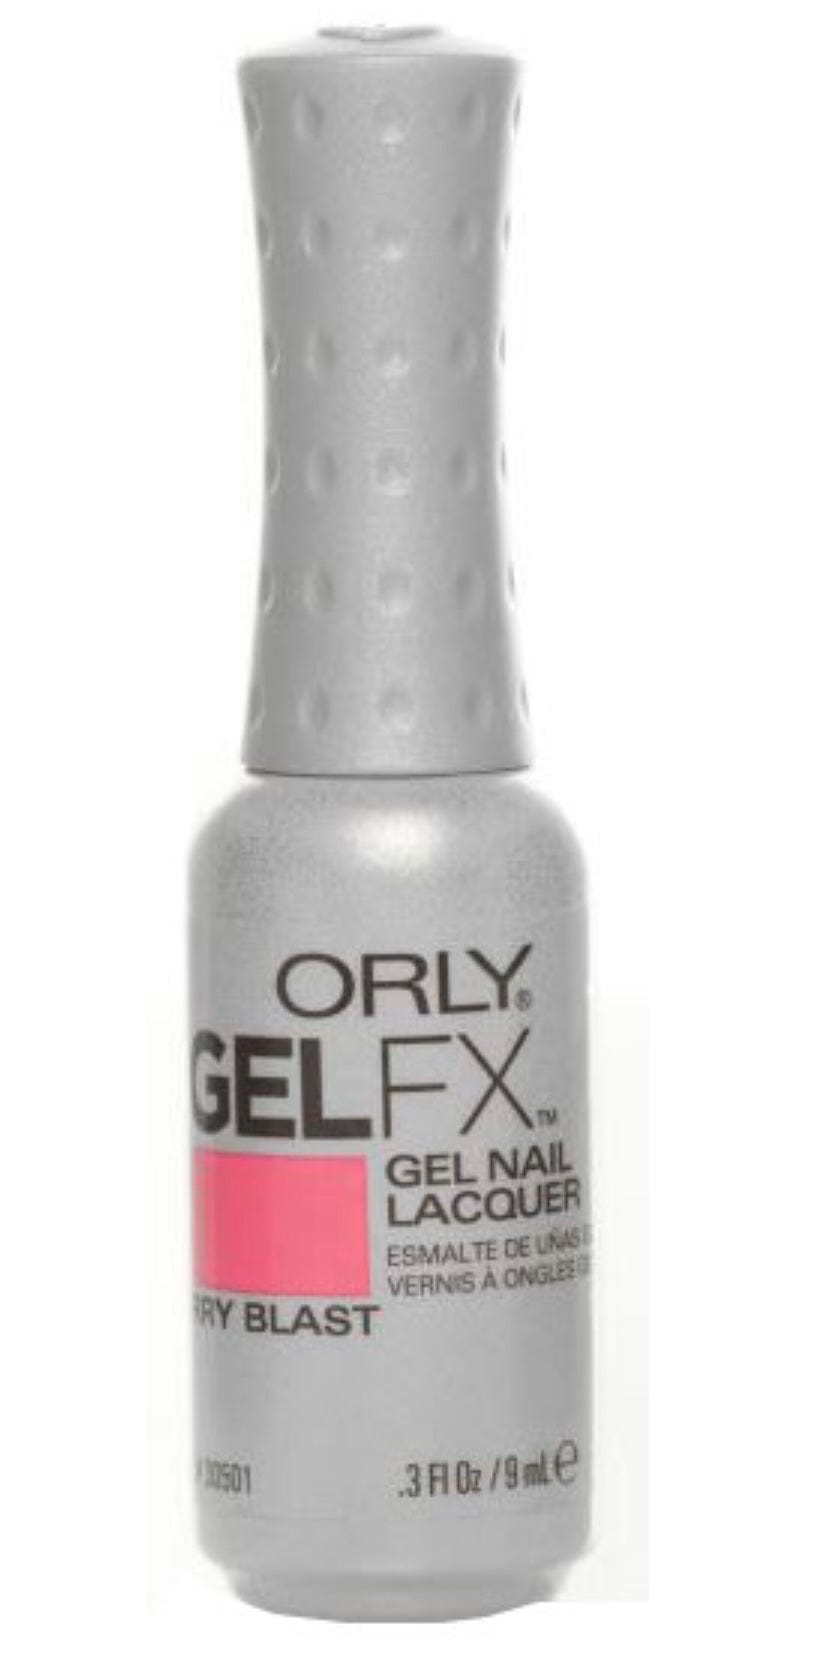 Orly Gel FX Nail Polish Berry Blast 0.3 oz Nail Polishes